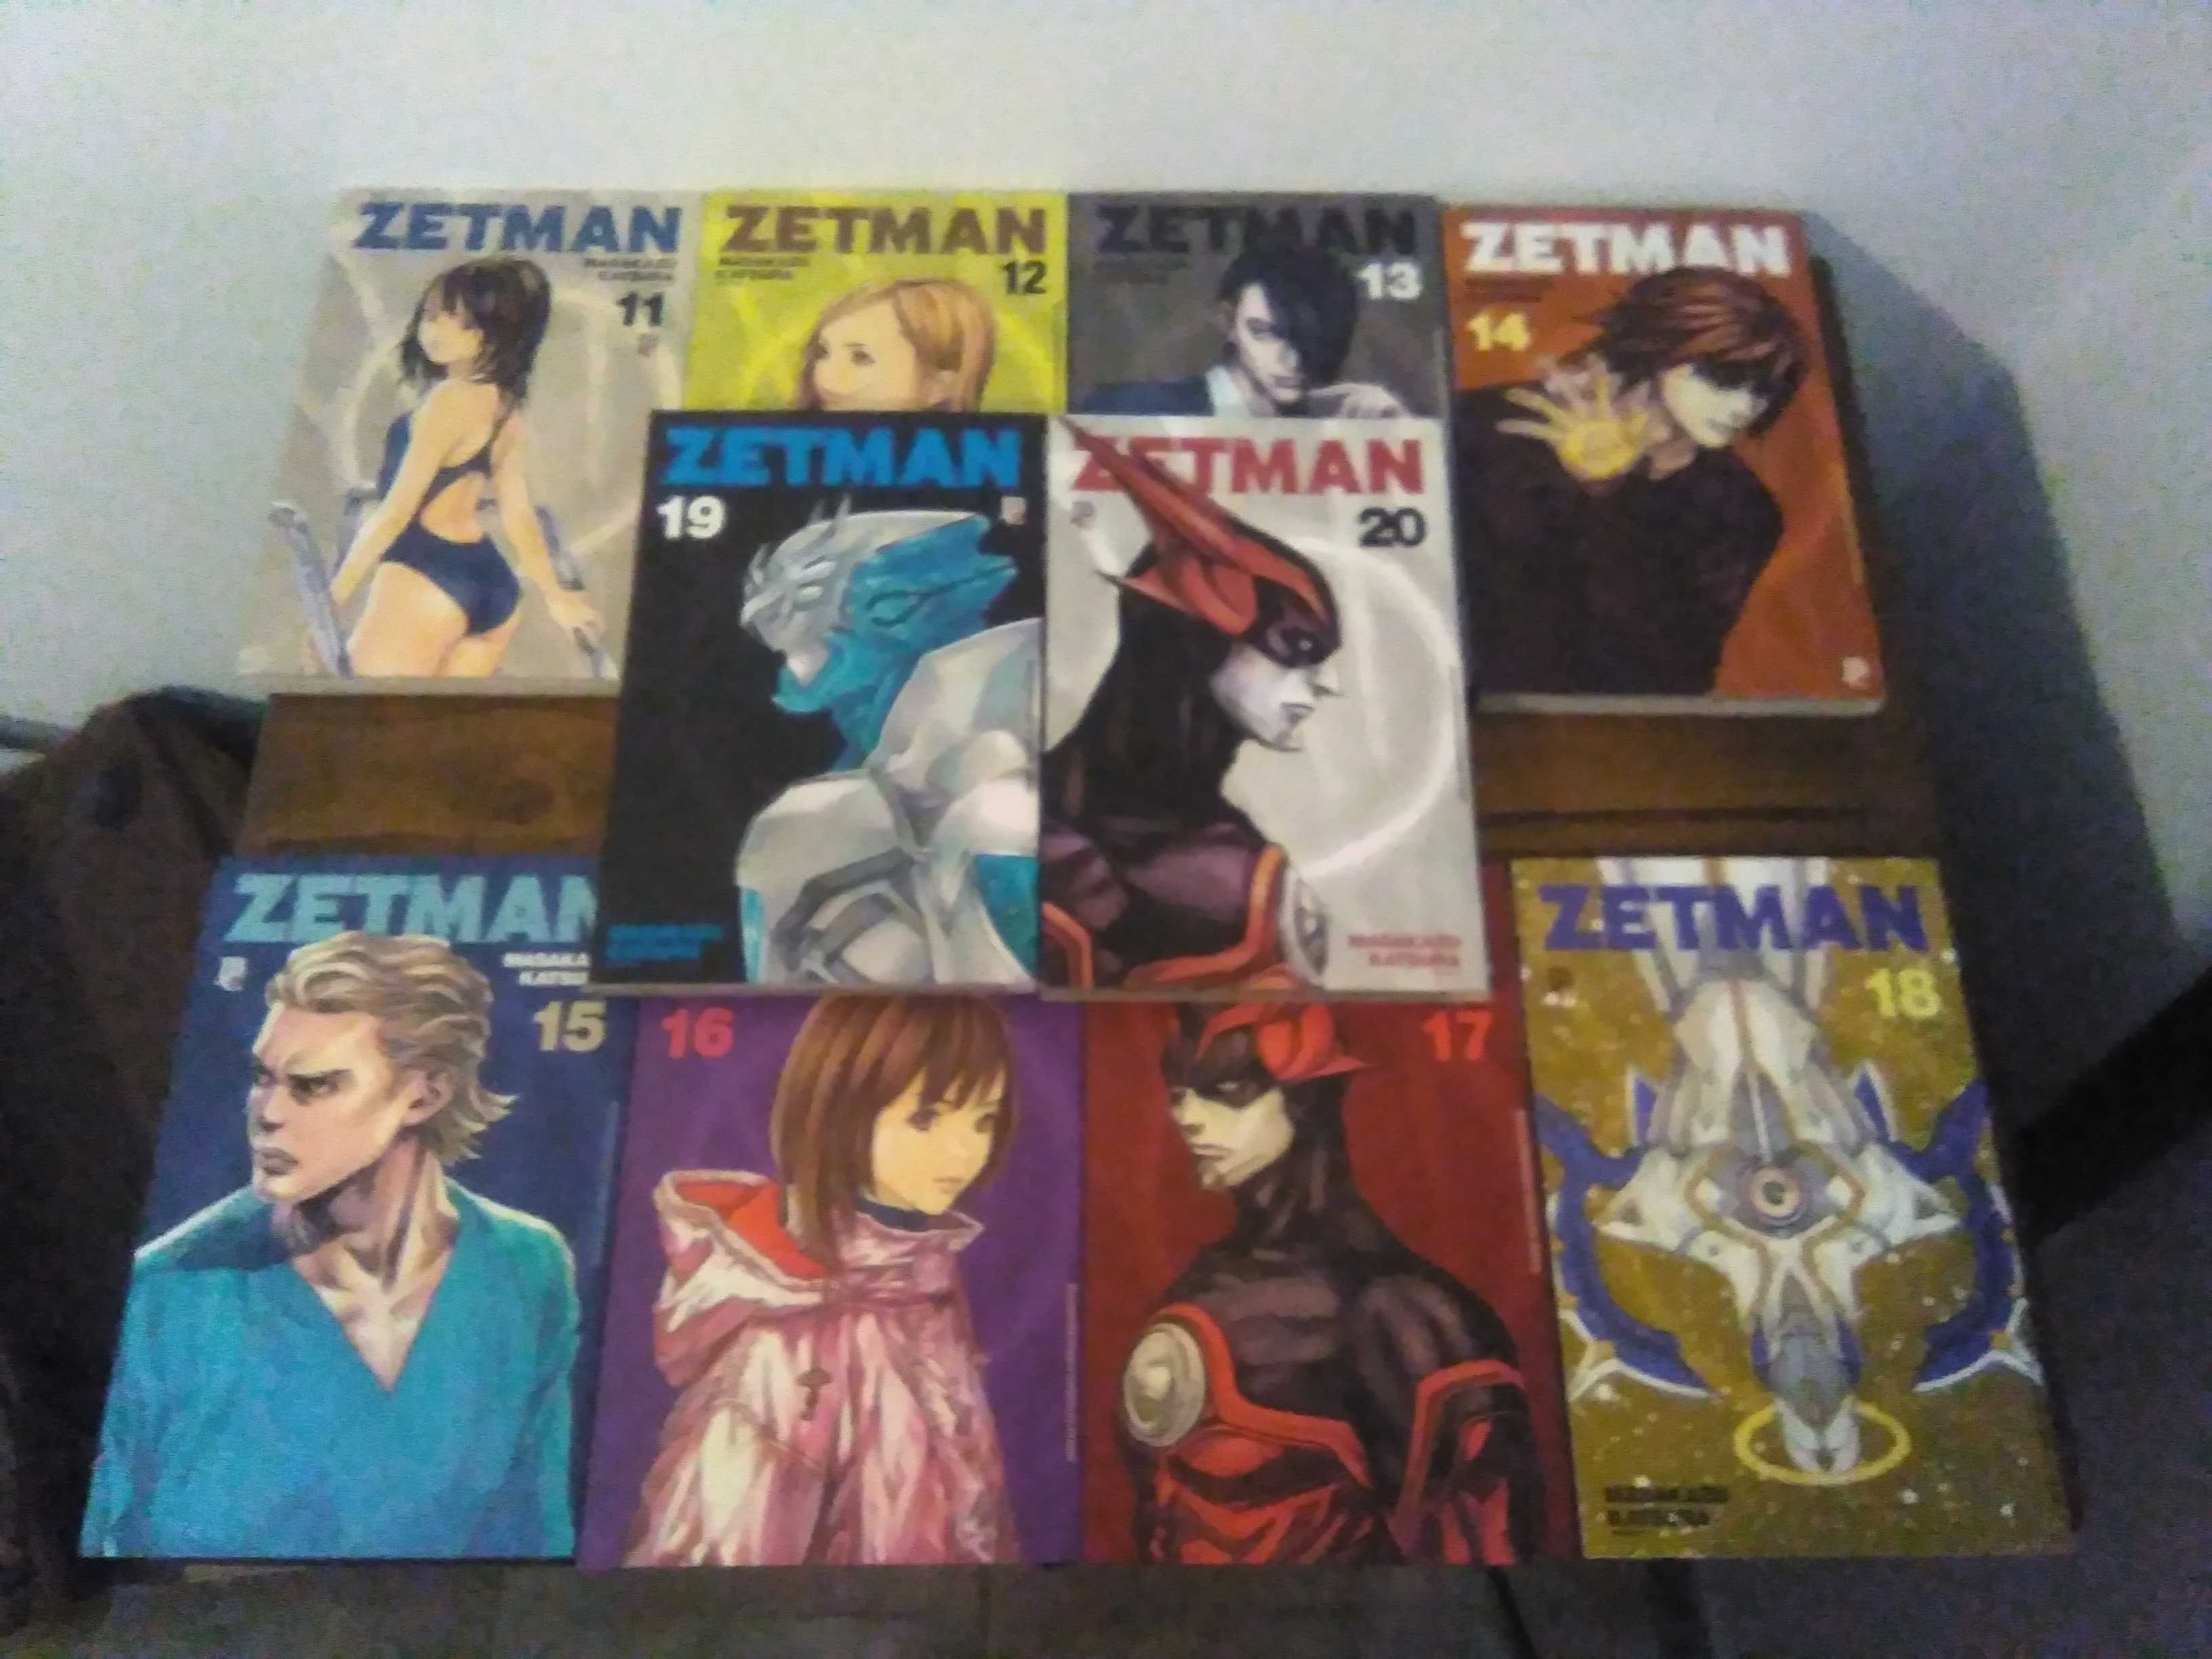 Zetman 20 volumes completo